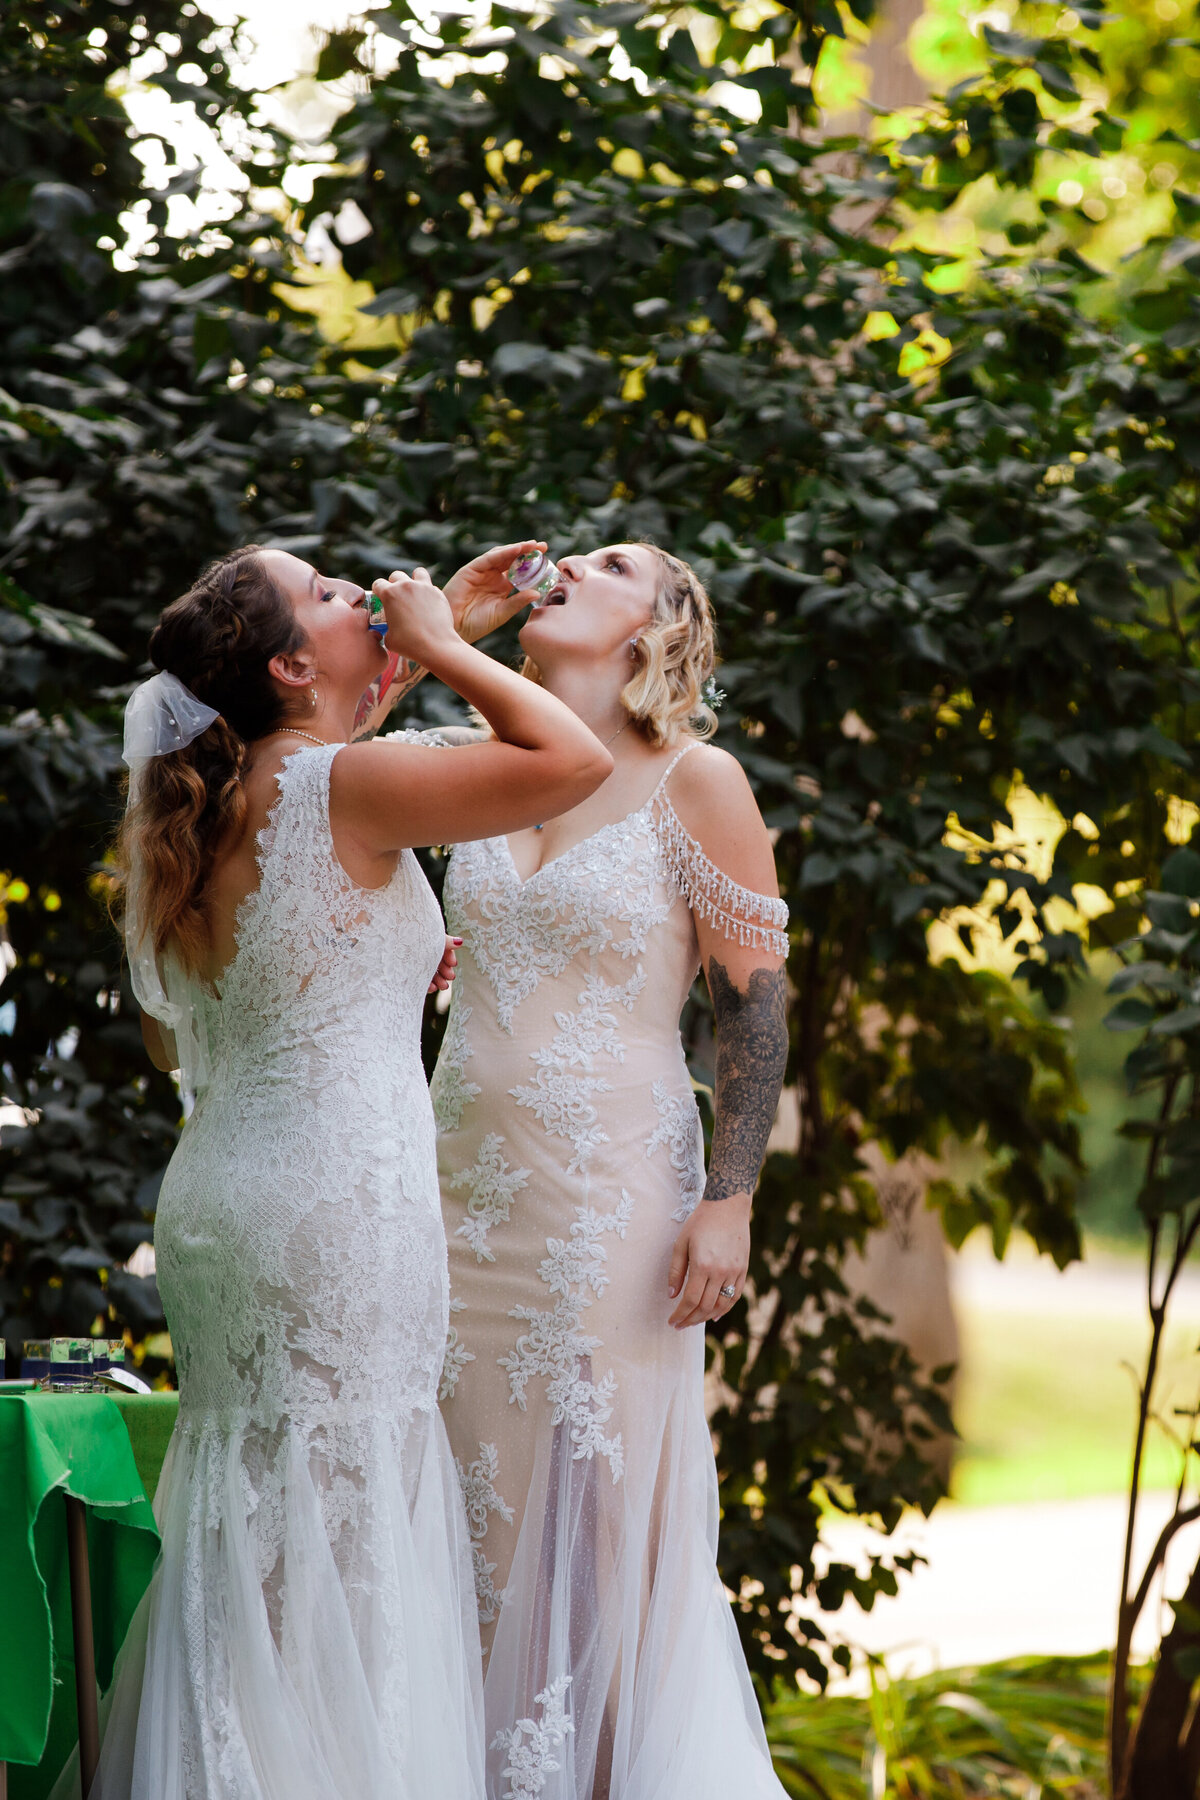 LGBTQ+ couple taking shots on their wedding day